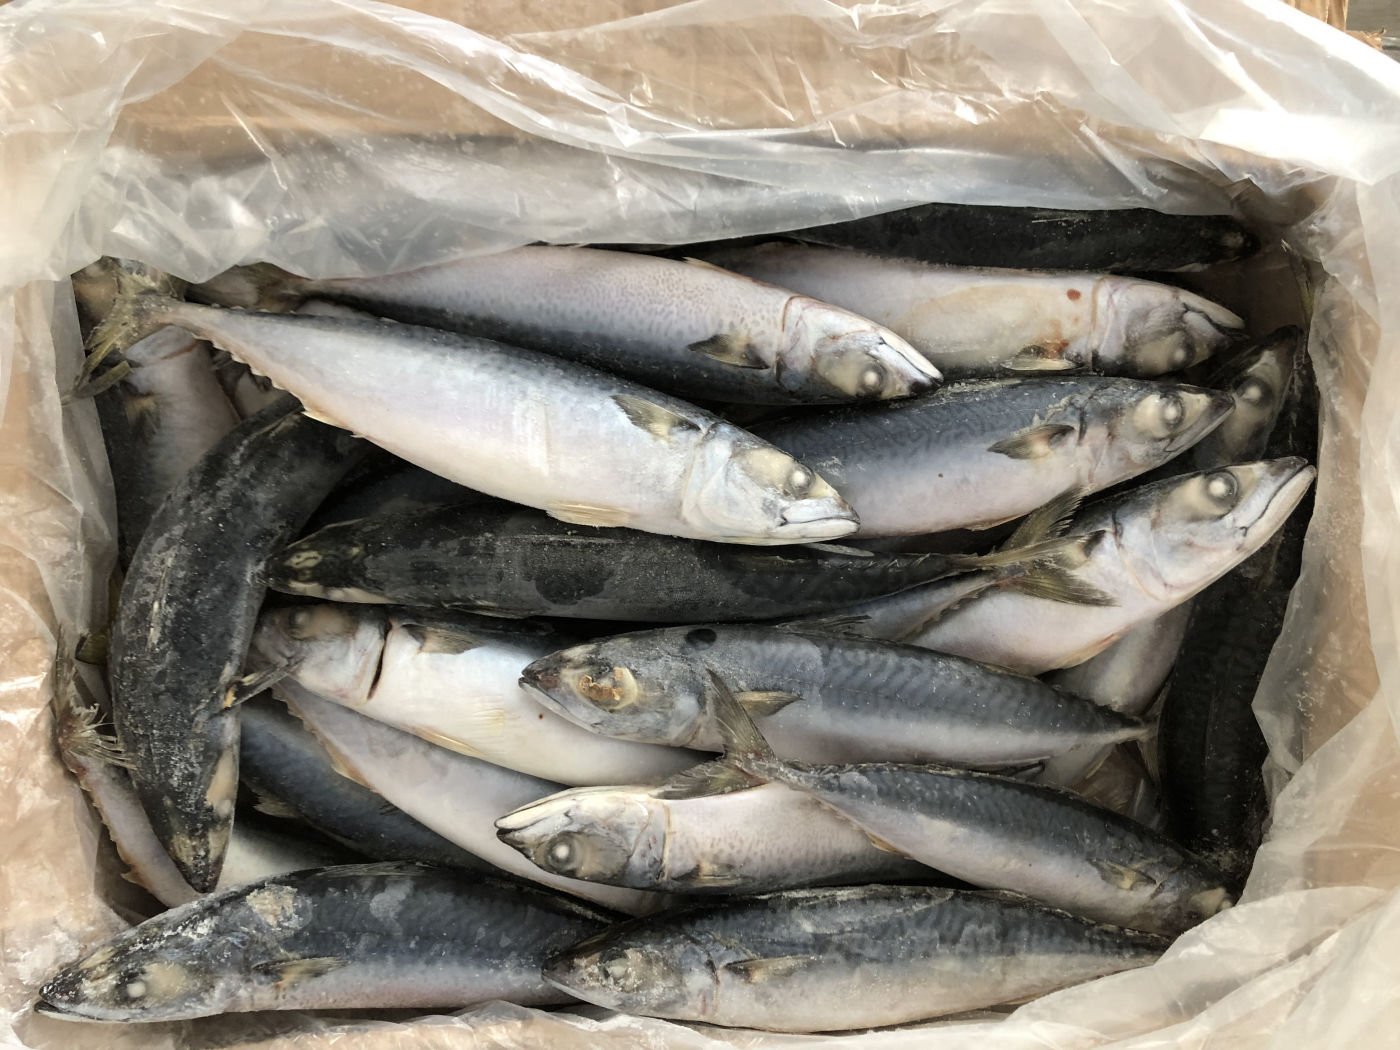 FROZEN PACIFIC MACKEREL FISH FOR SALE 